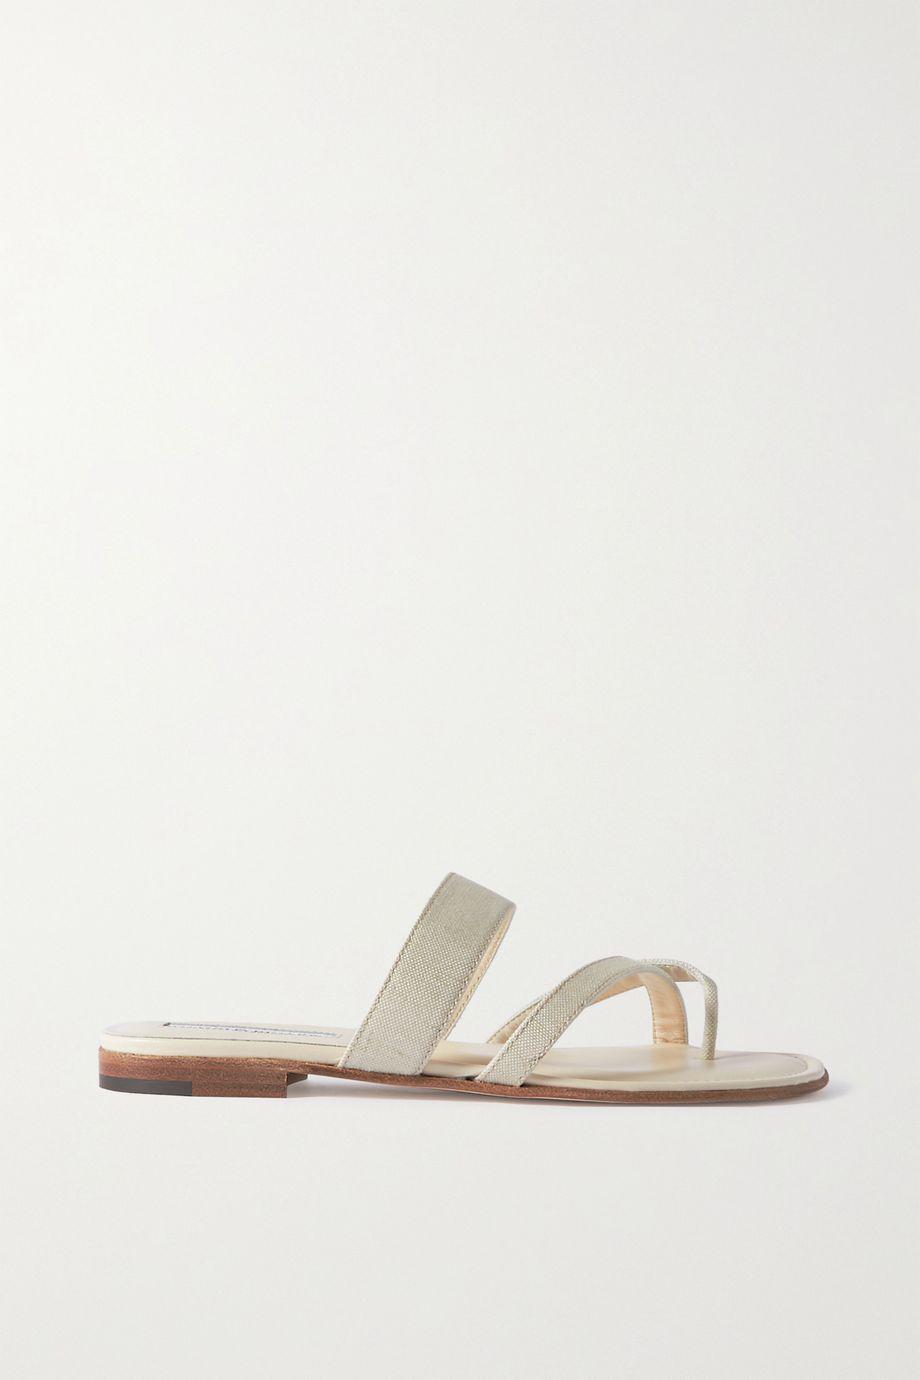 Susa linen sandals by MANOLO BLAHNIK